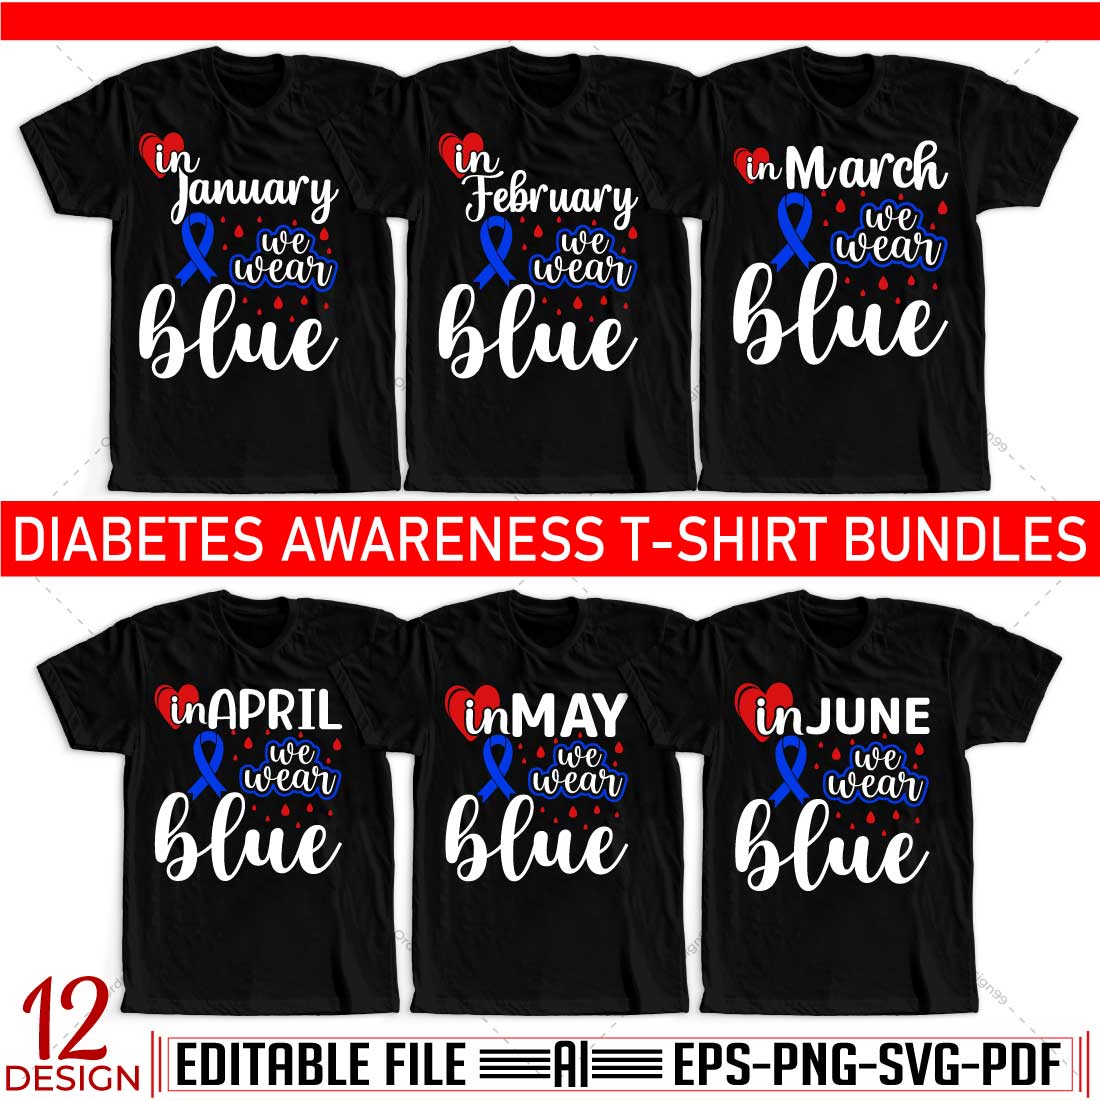 Diabetes Awareness T-shirt Bundles cover image.